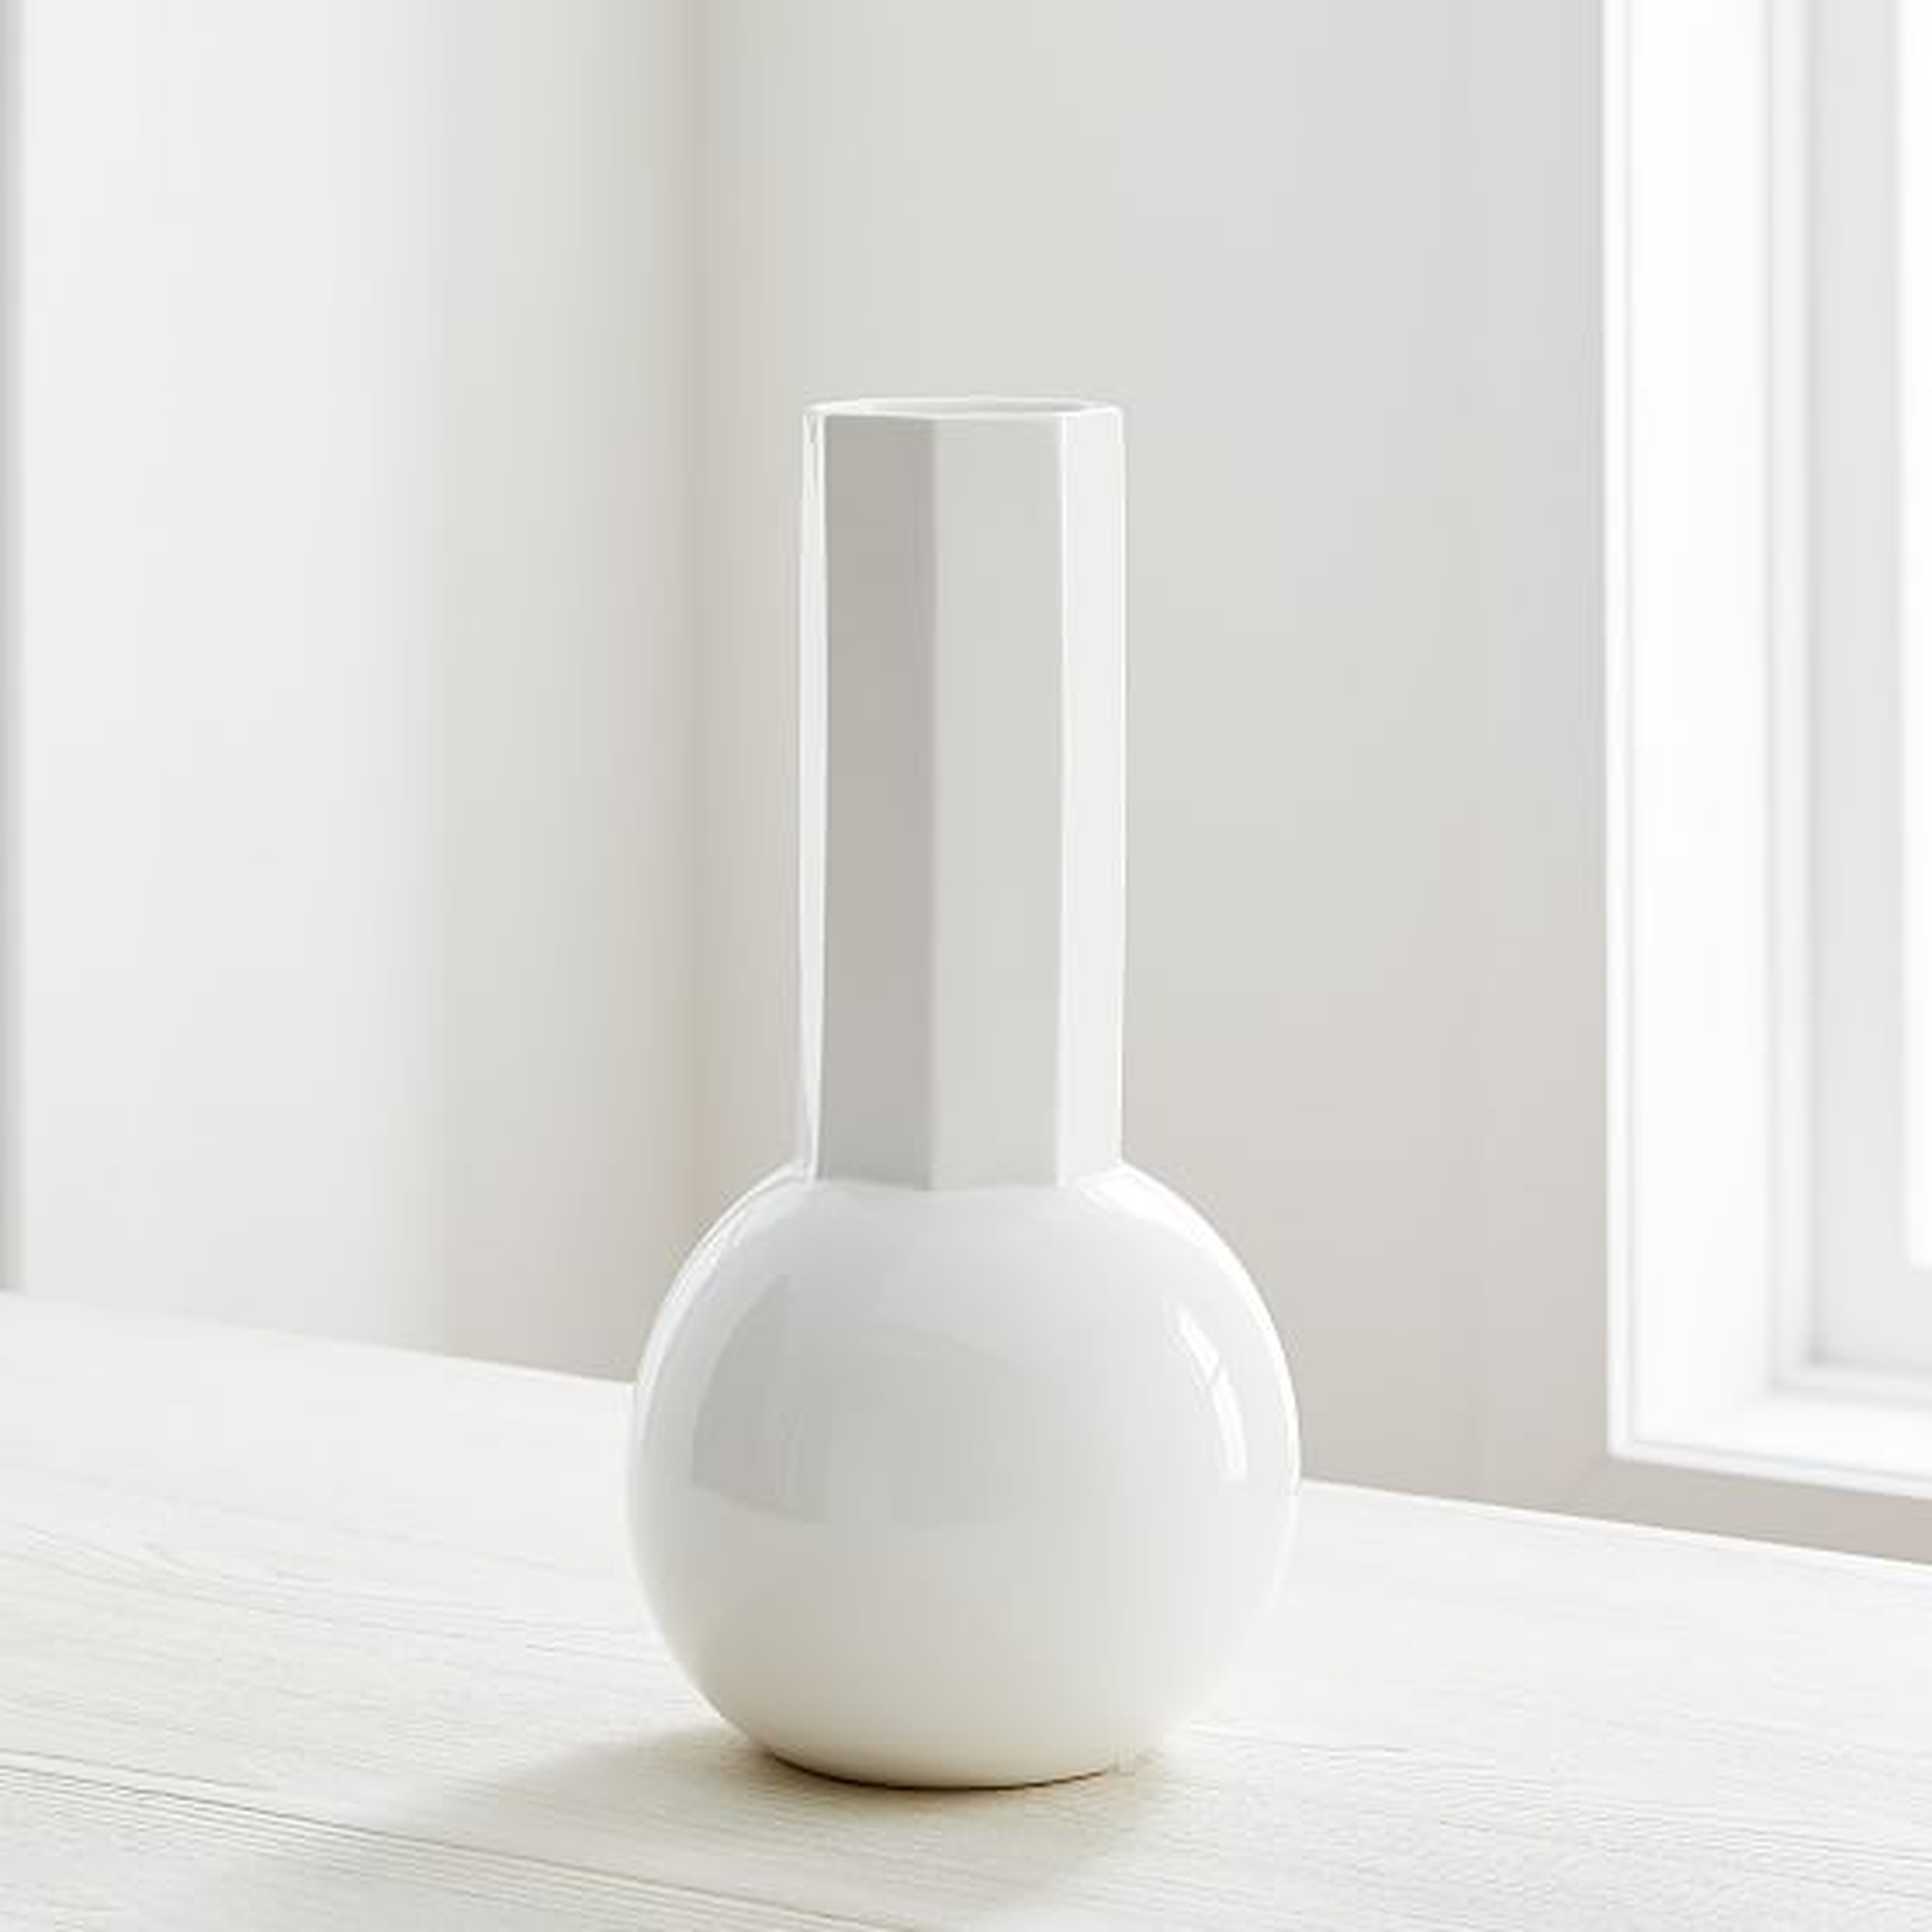 Porcelain Urn Vase, Tall, White - West Elm